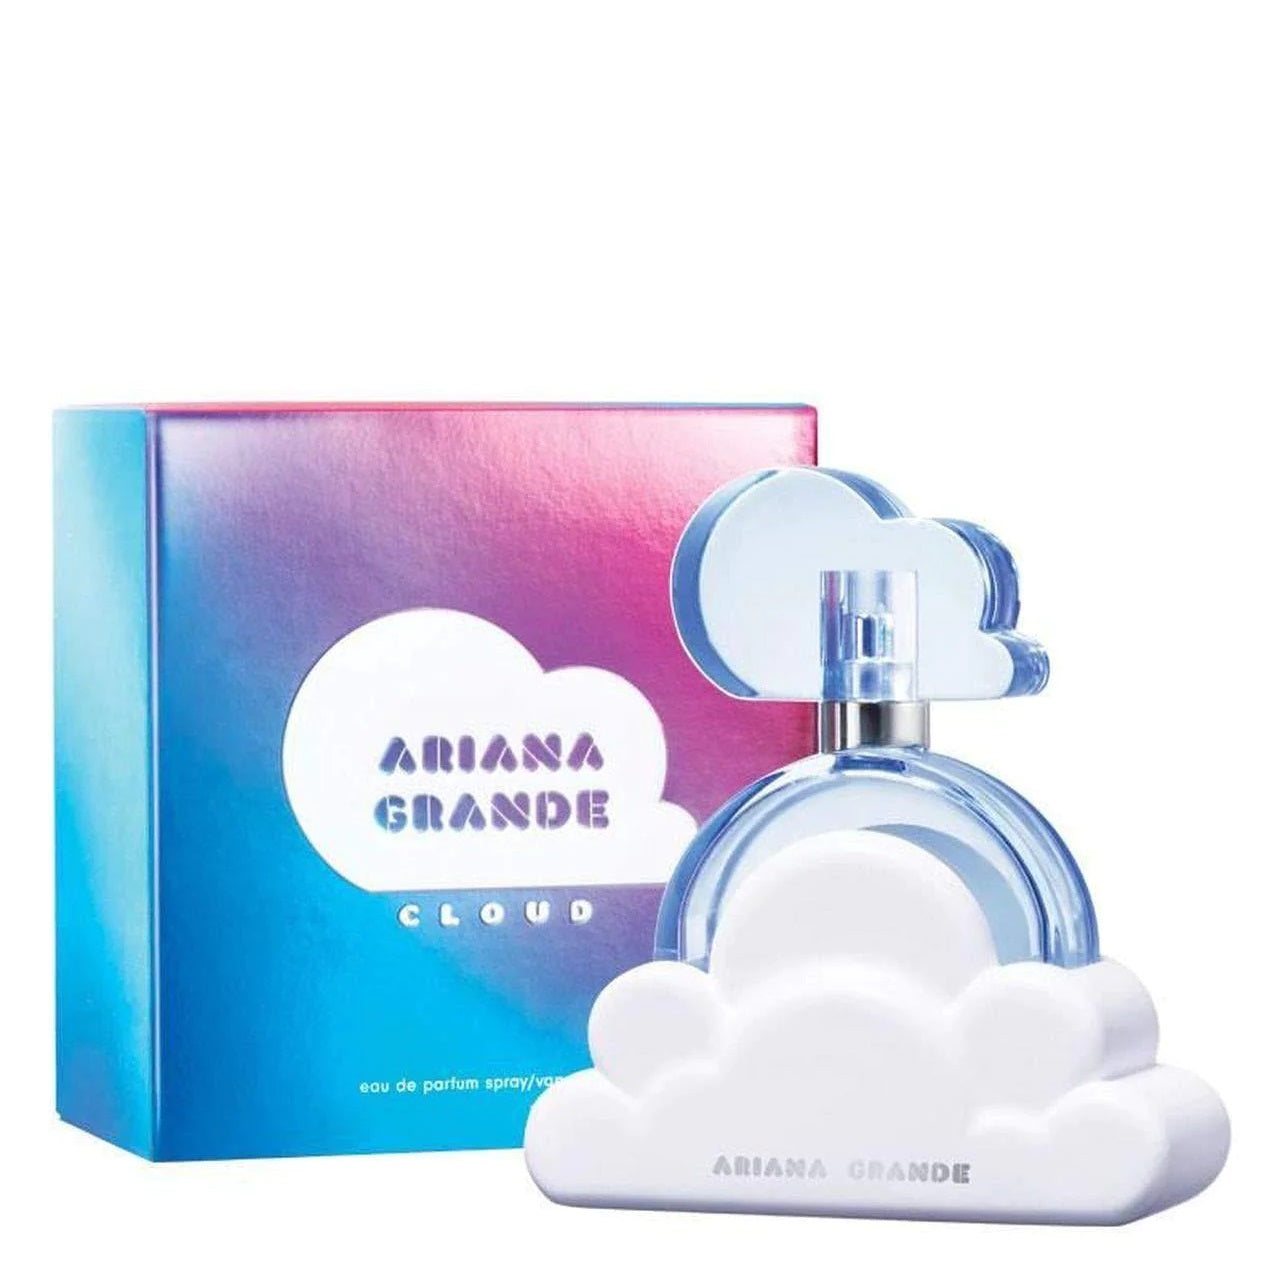 Cloud De Ariana Grande - 100ML